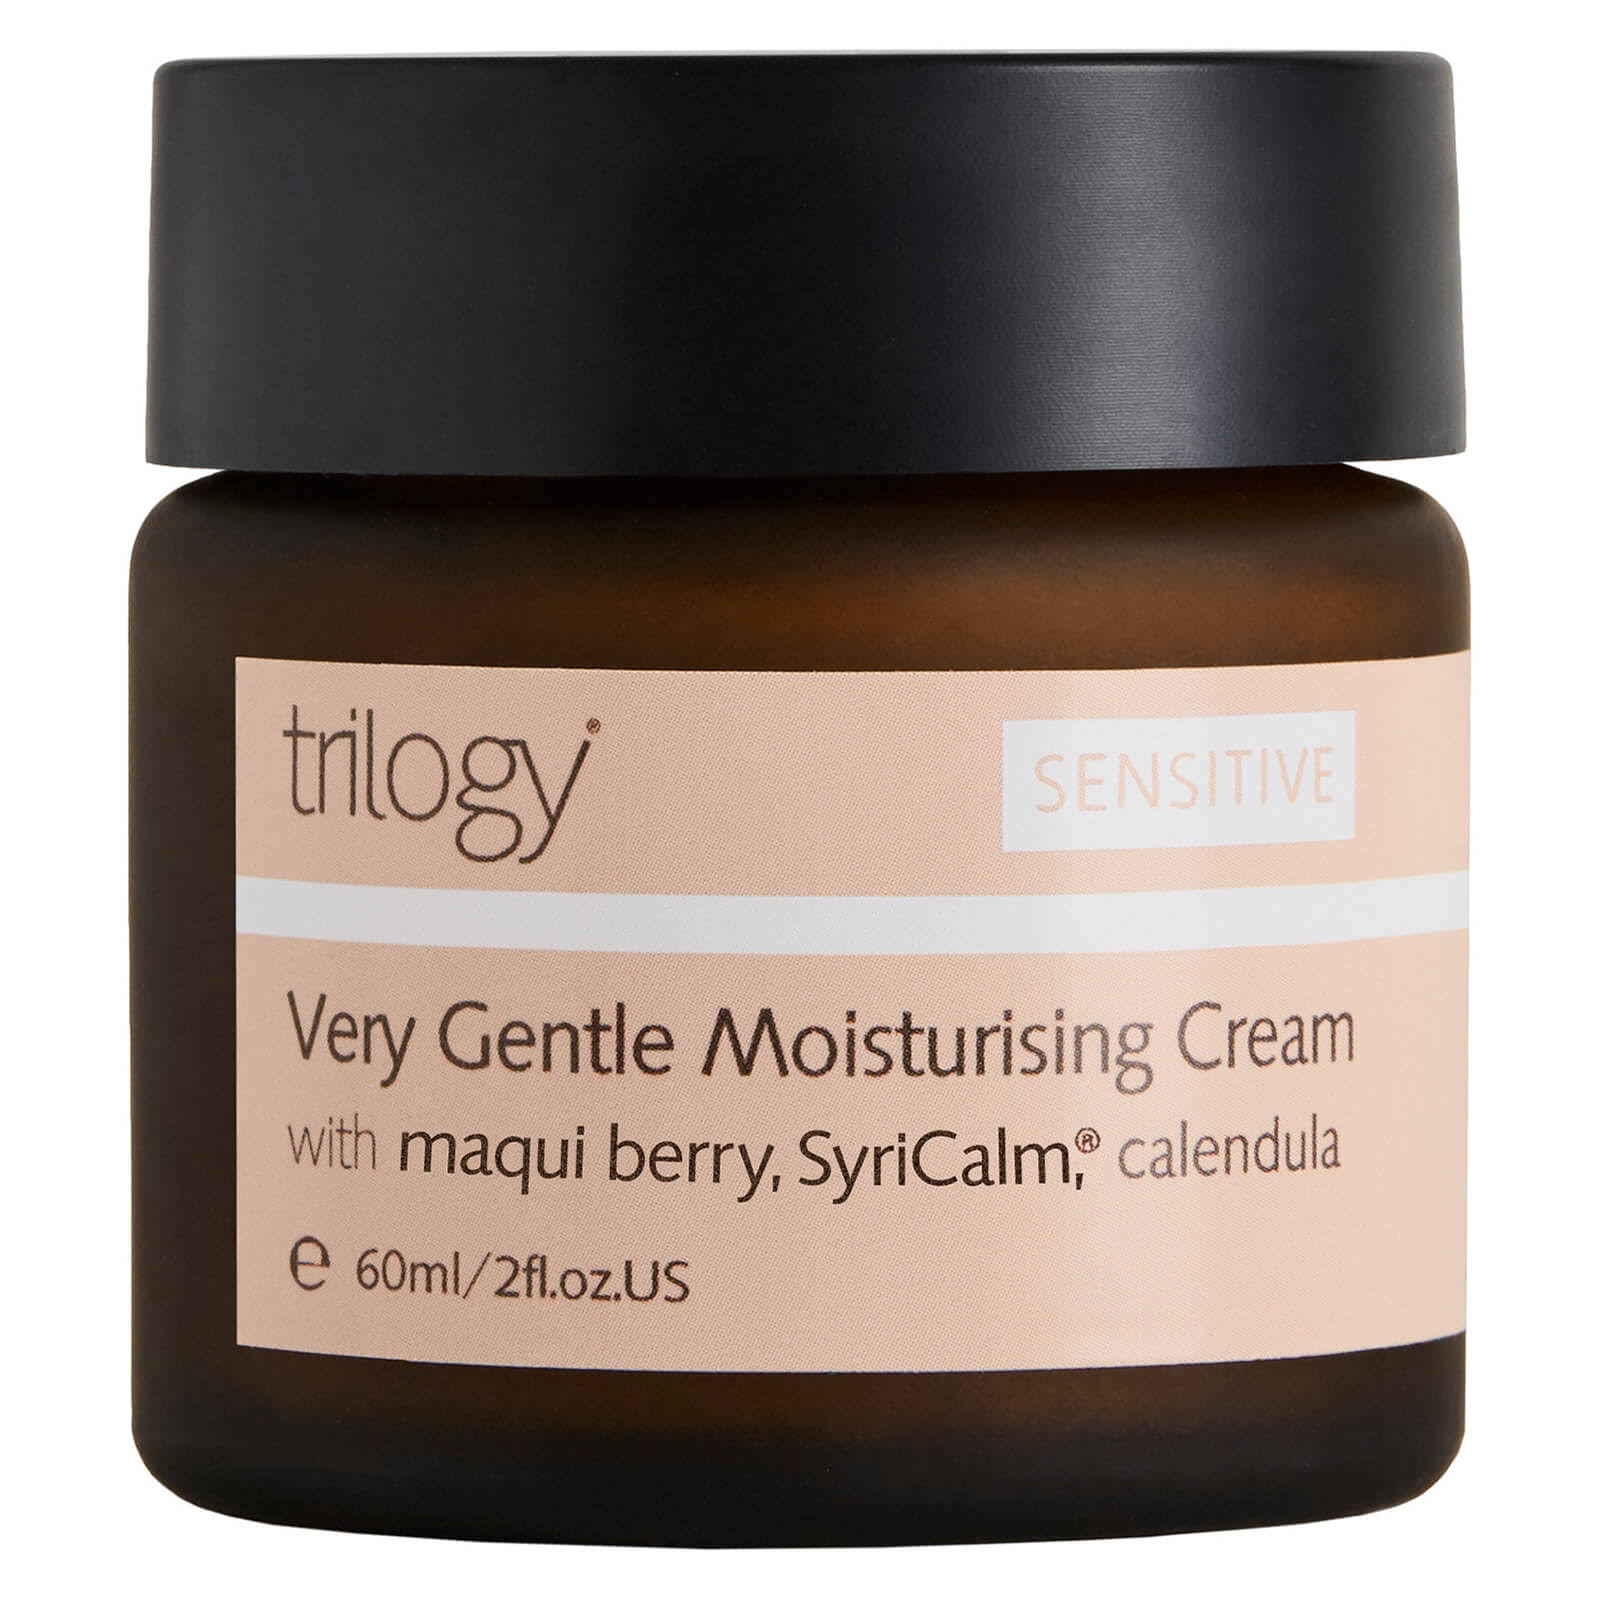 Trilogy Very Gentle Moisturising Cream - 60ml